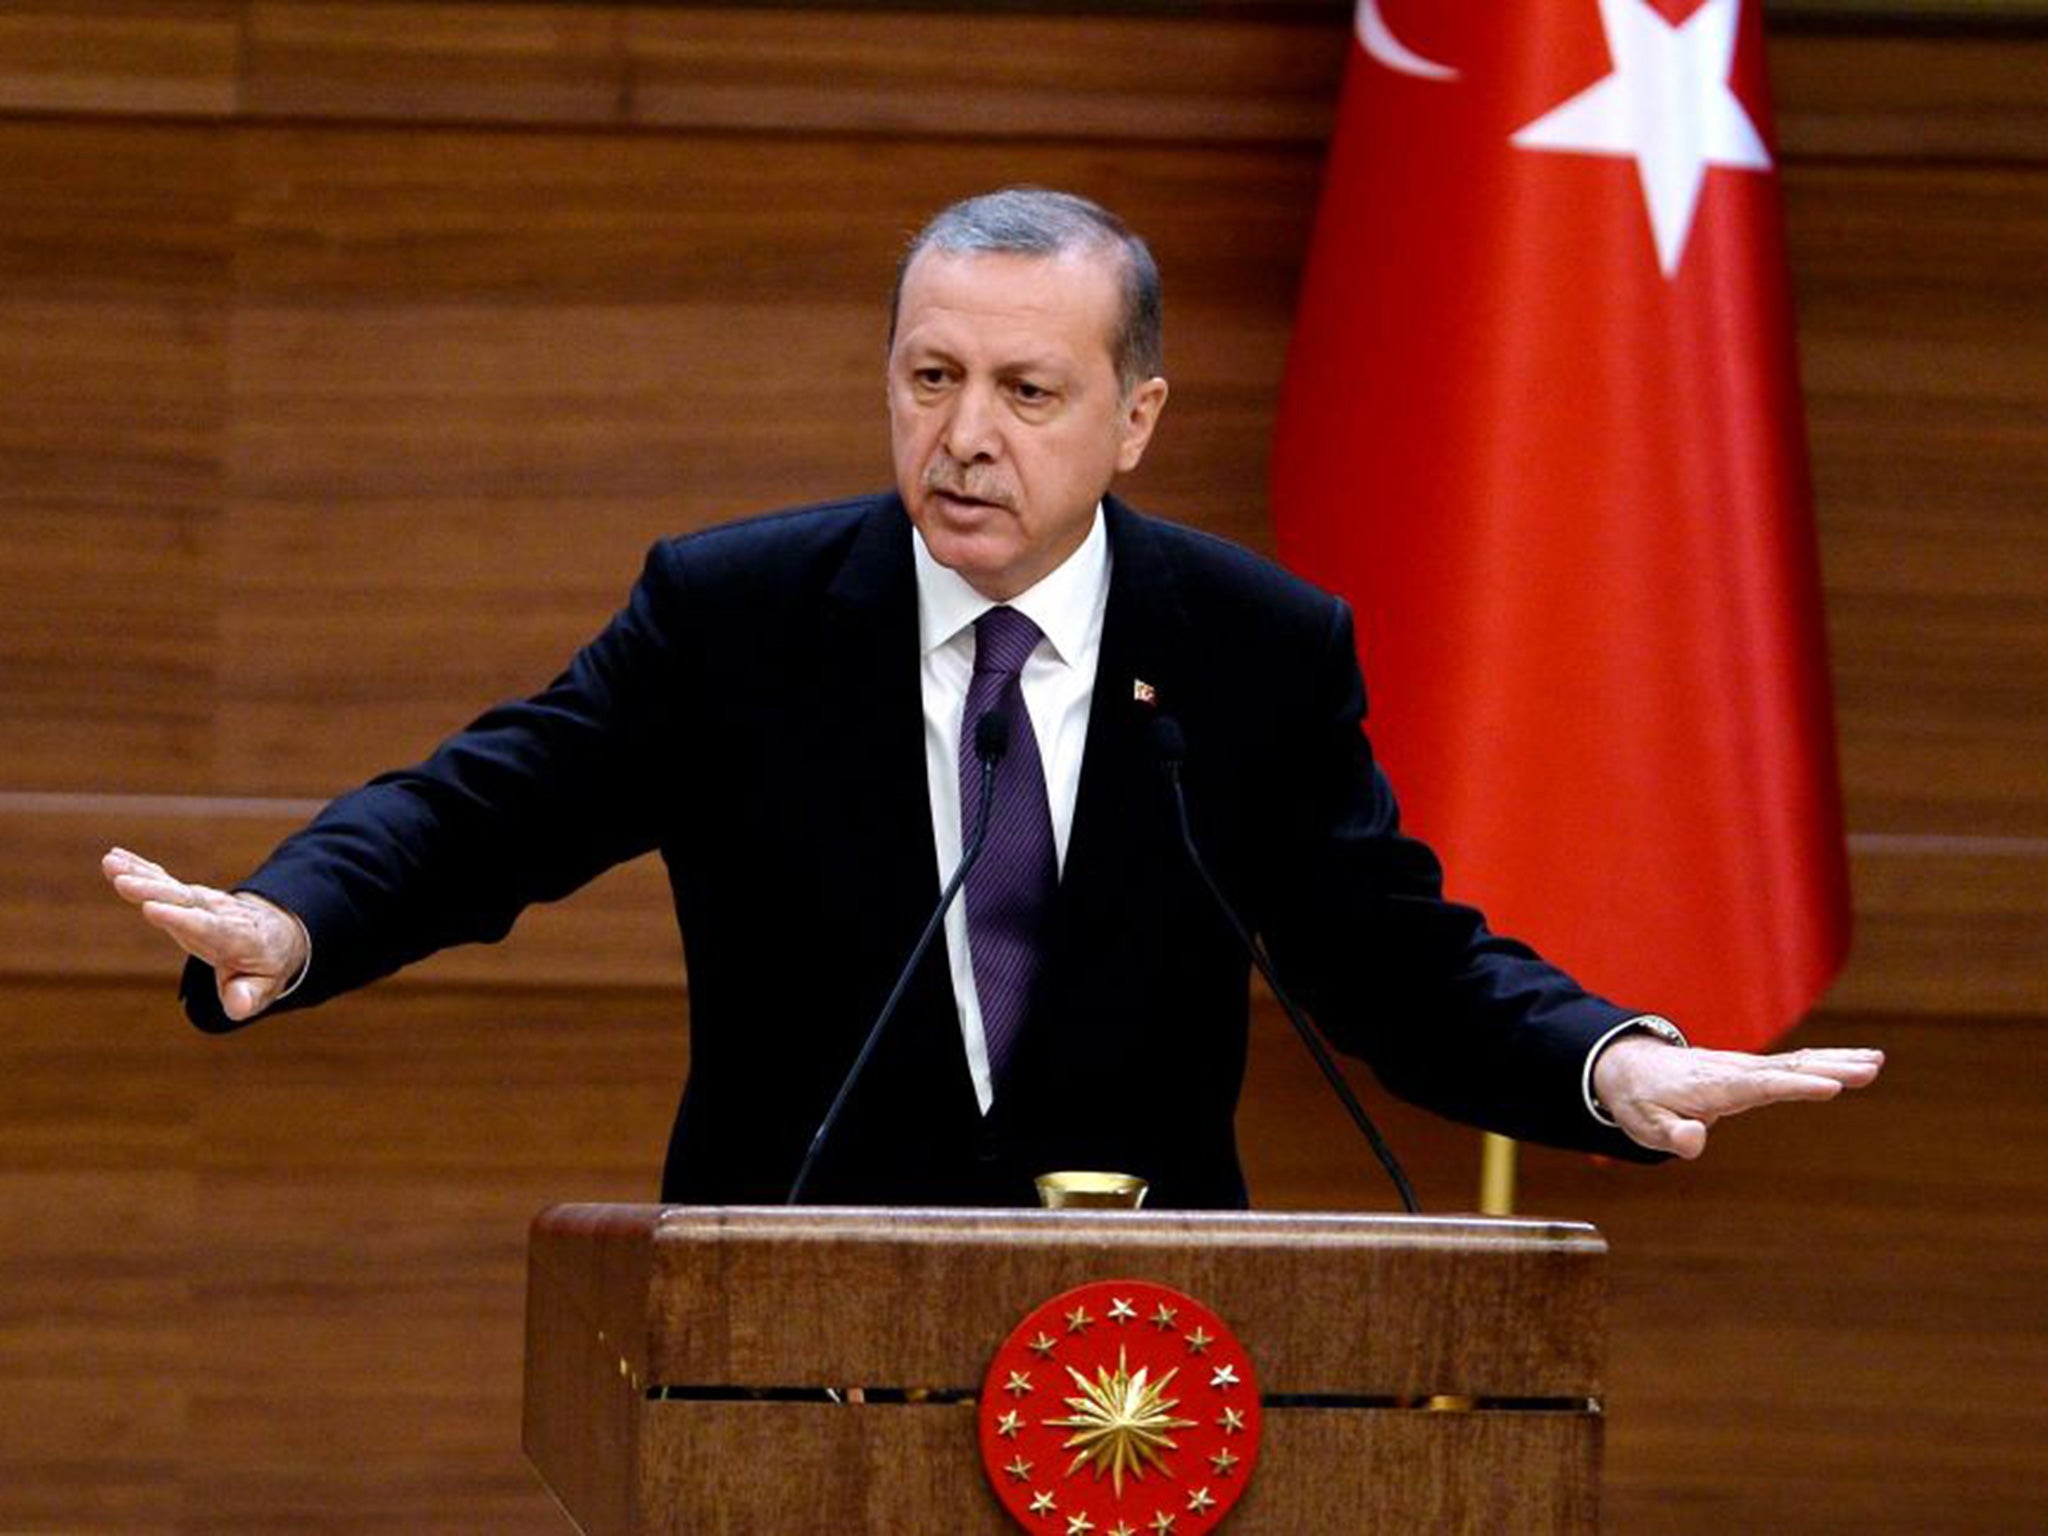 President Recep Tayyip Erdogan spoke at the G20 Leaders Summit in Antalya, Turkey